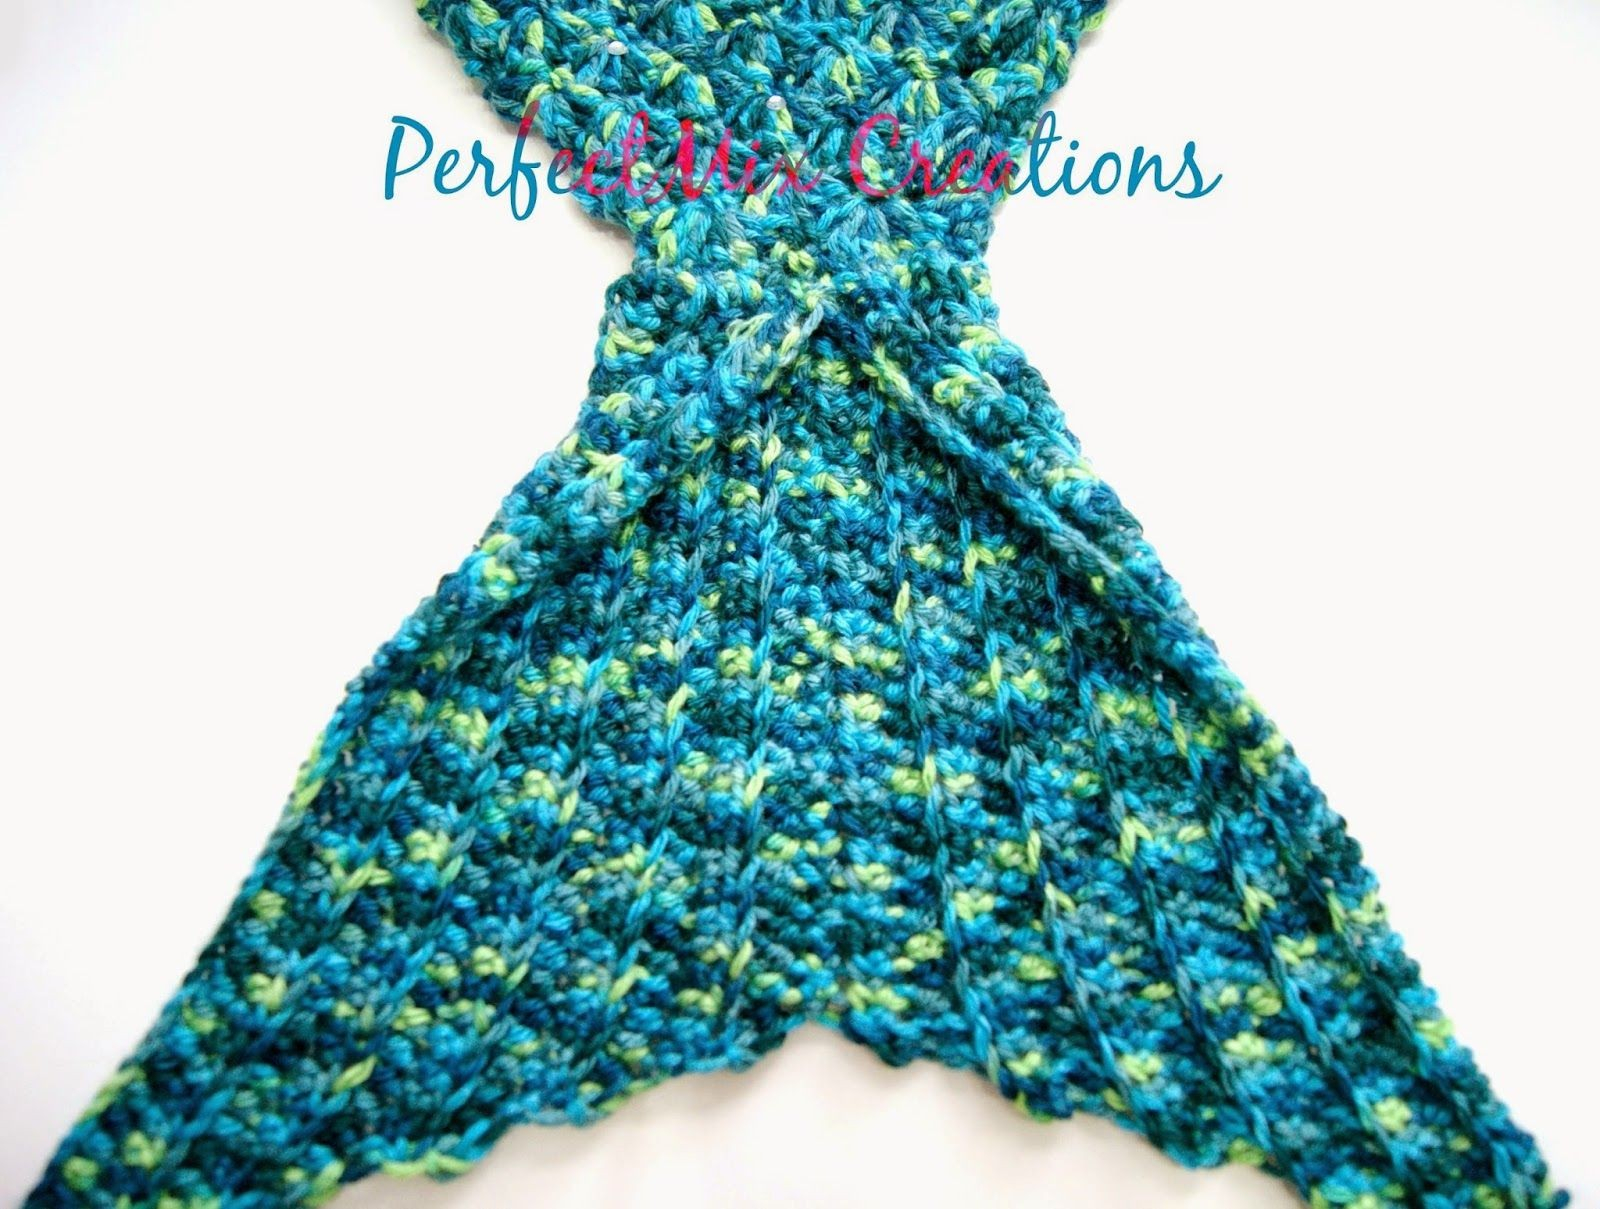 Mermaid Crochet Pattern For Baby Crochet Pattern For Mermaid Tail Inspirational Pattern Mermaid Tail